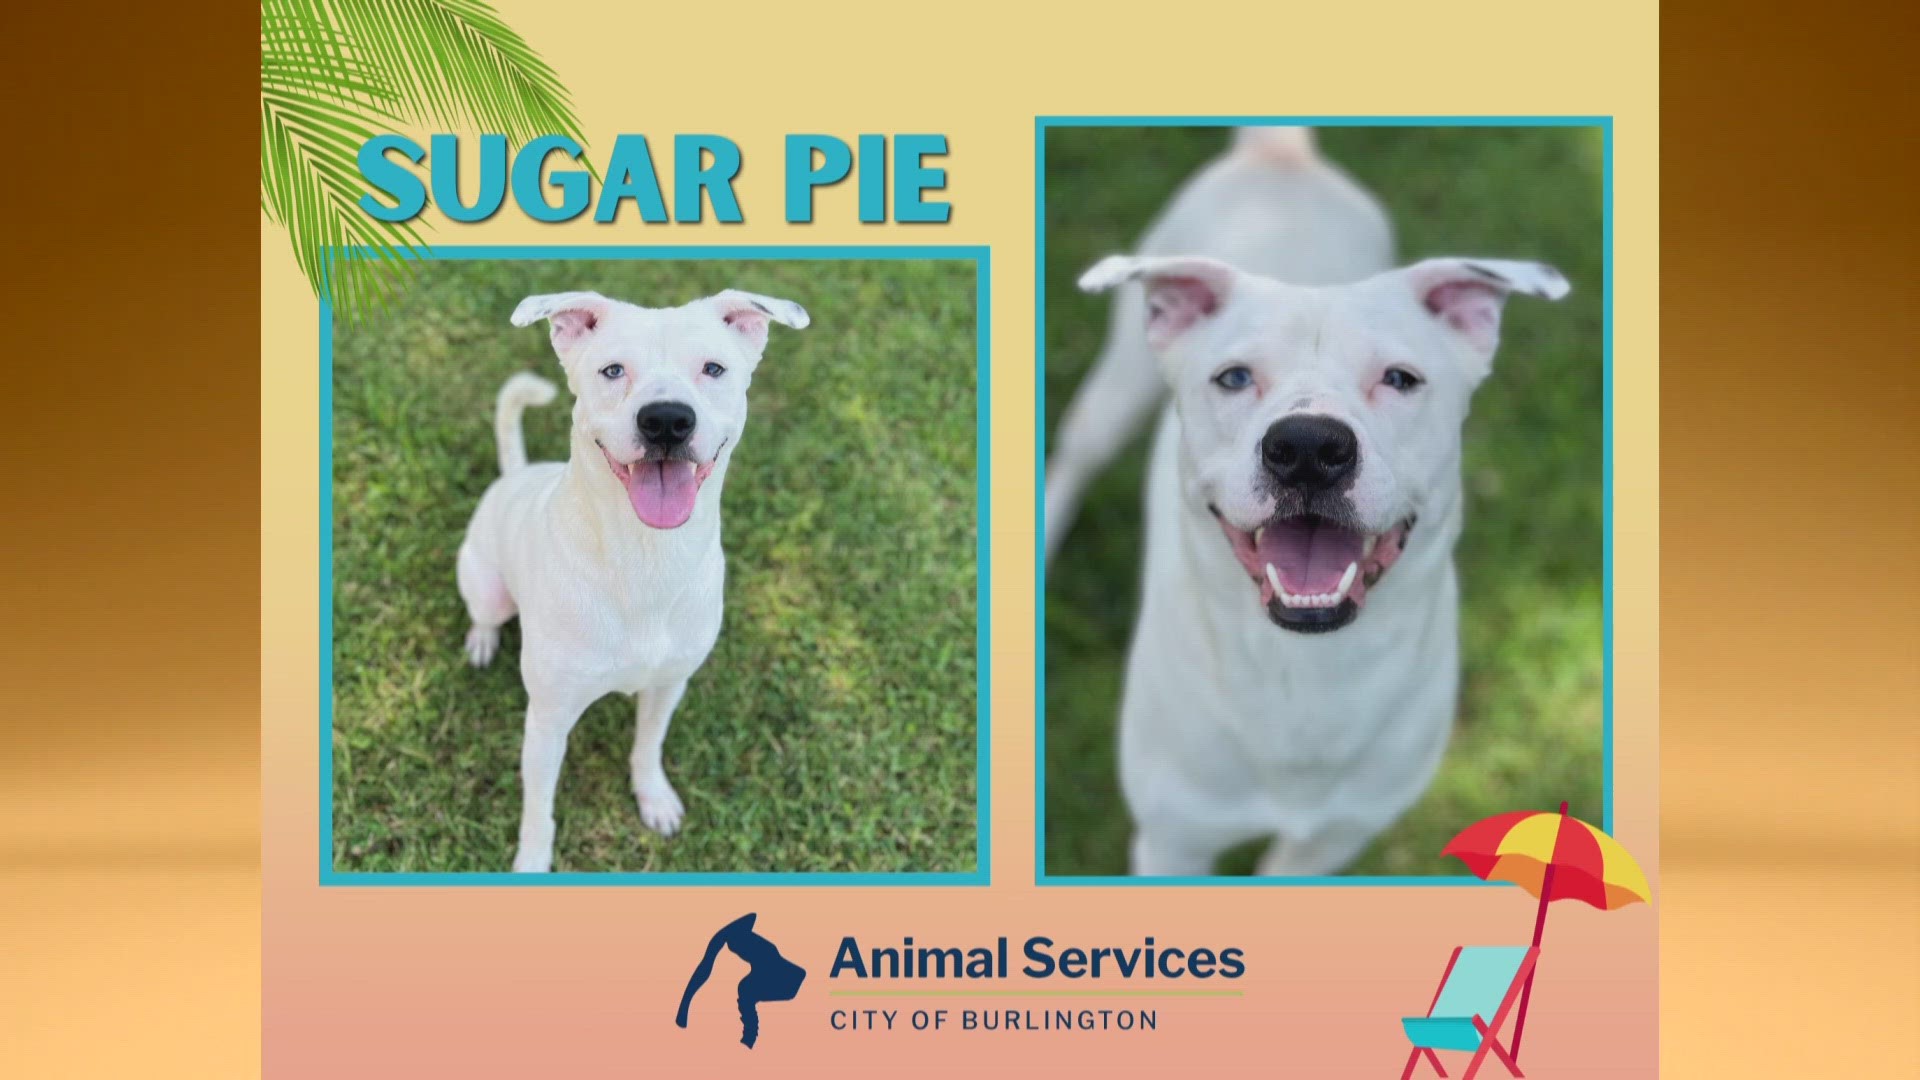 Let’s get Sugar Pie adopted!